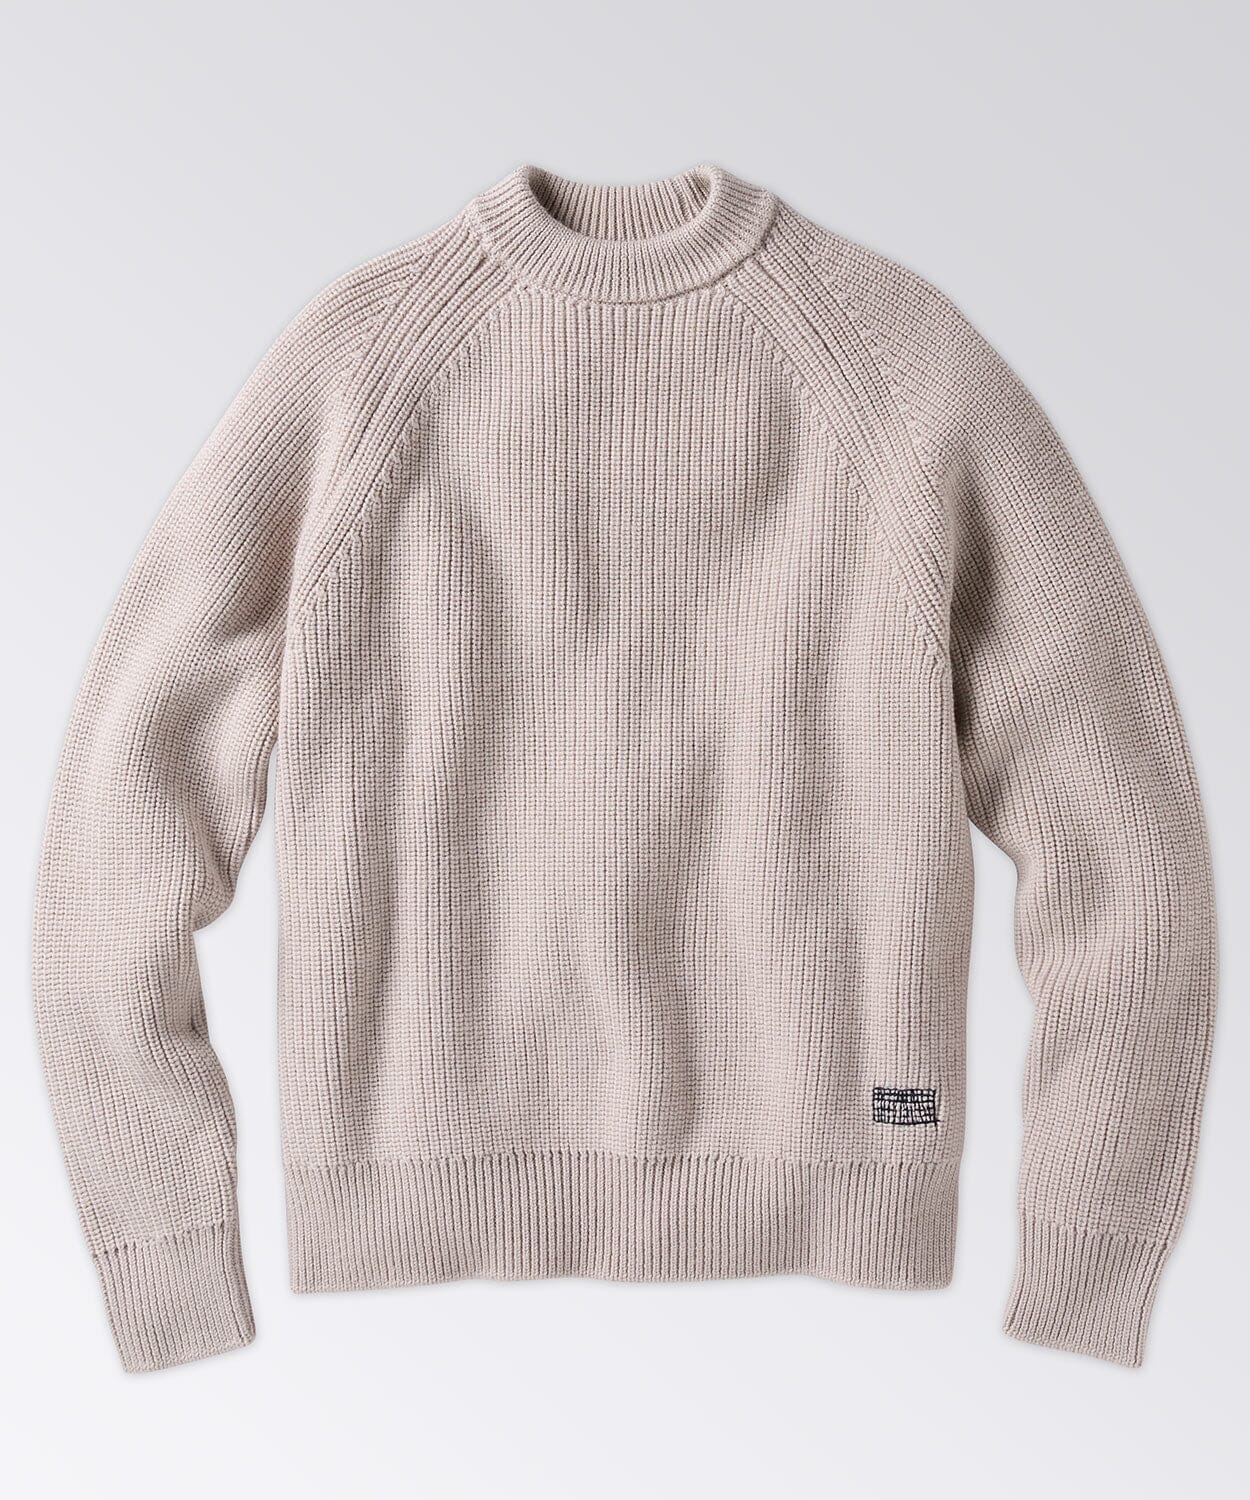 Howell Crew Sweater